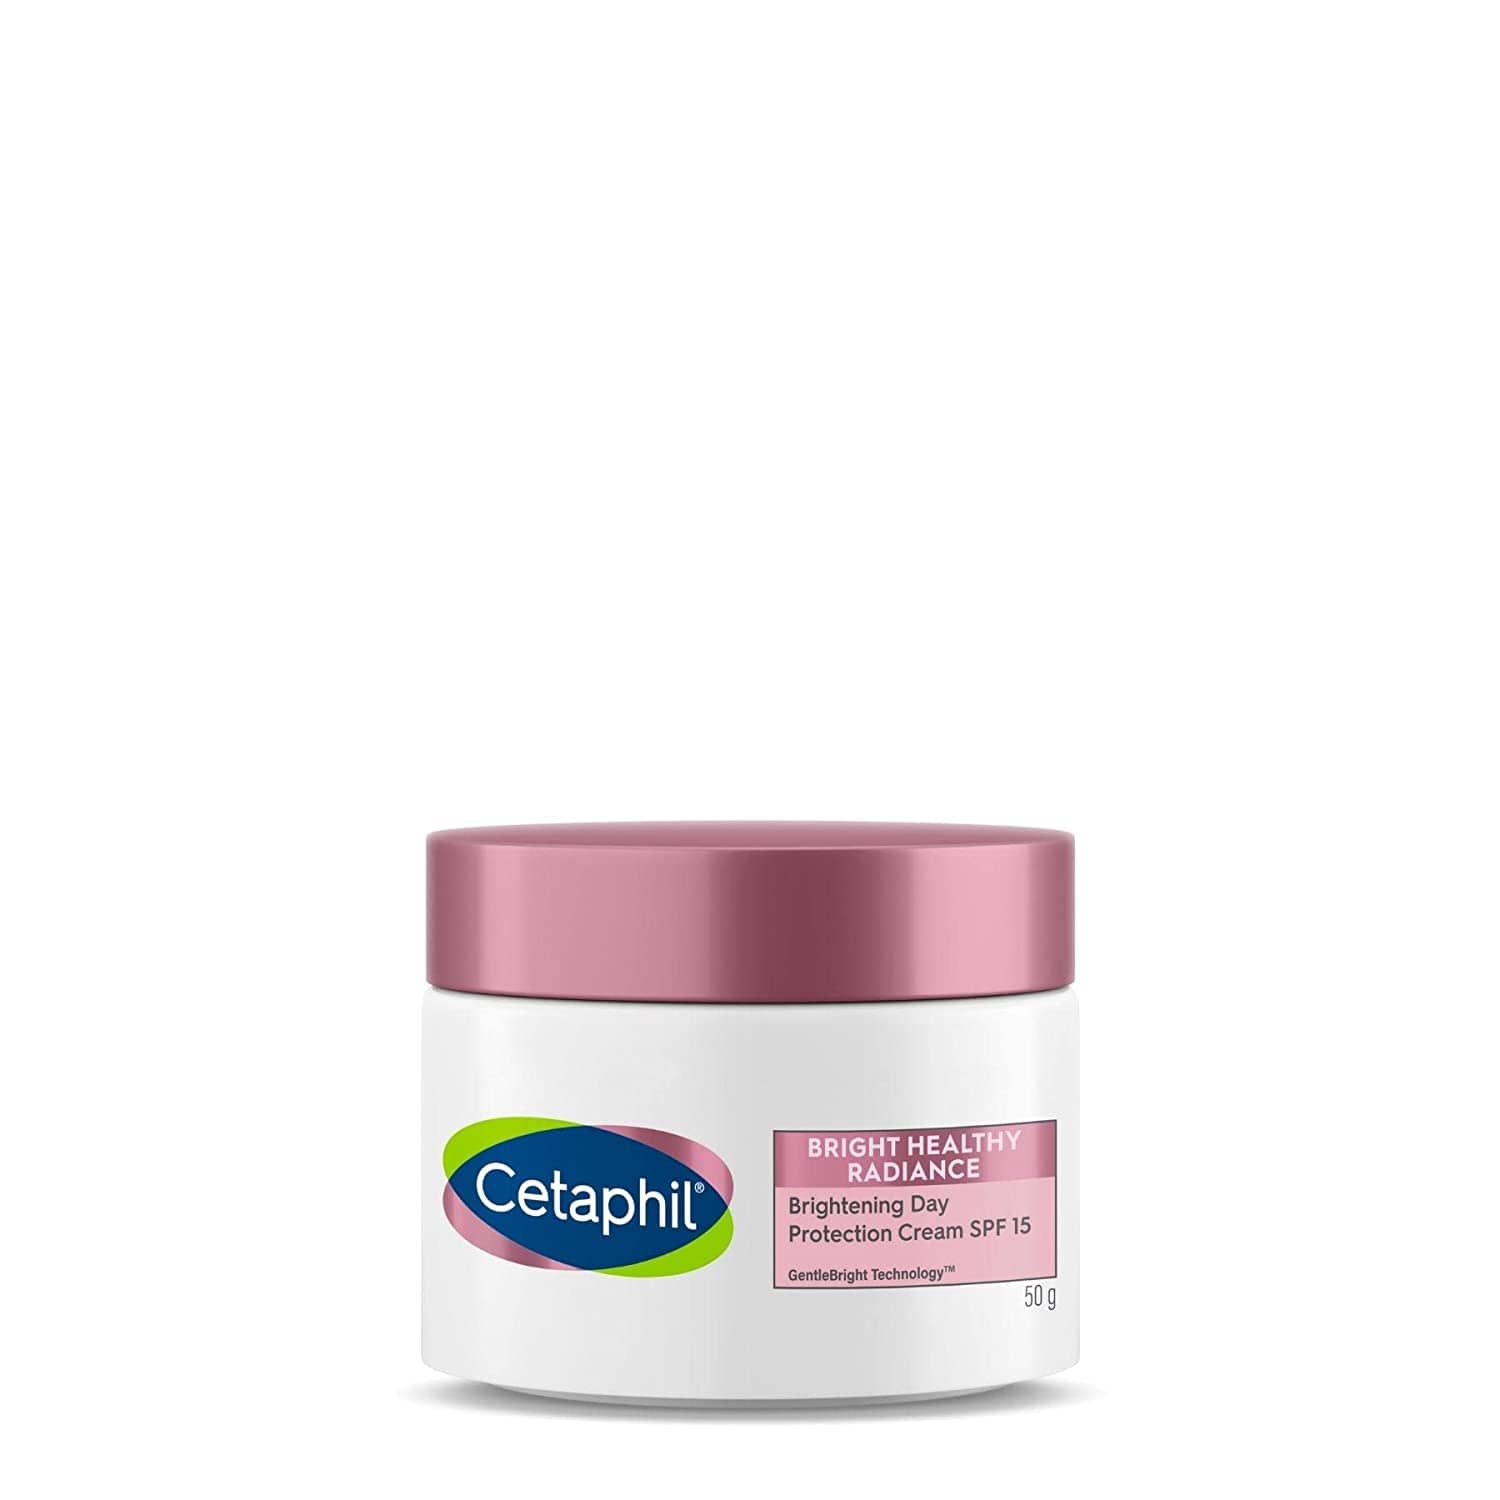 Cetaphil Brightening Day Protection Cream SPF 15, 50 gm Day Cream for Dark Spots